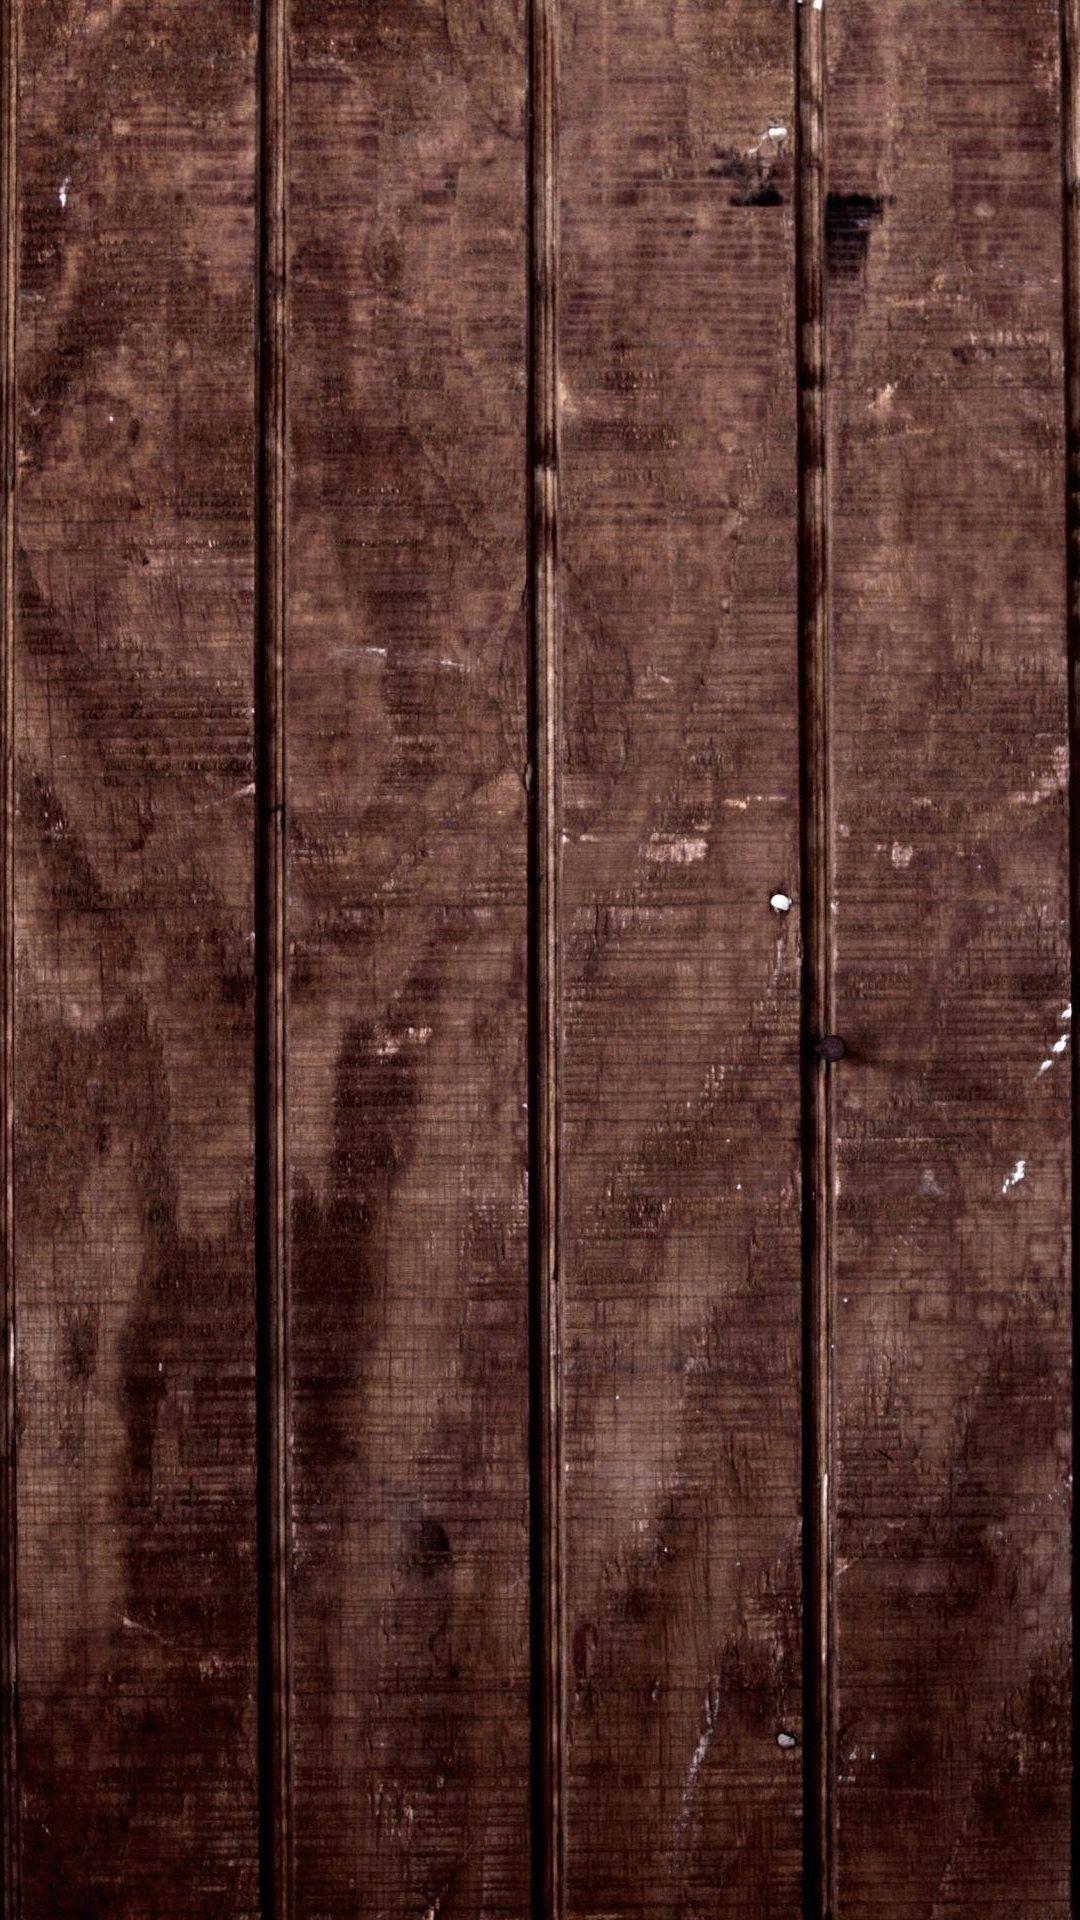 Versace Home Wallpaper «Wood, Beige, Cream, White» 370521